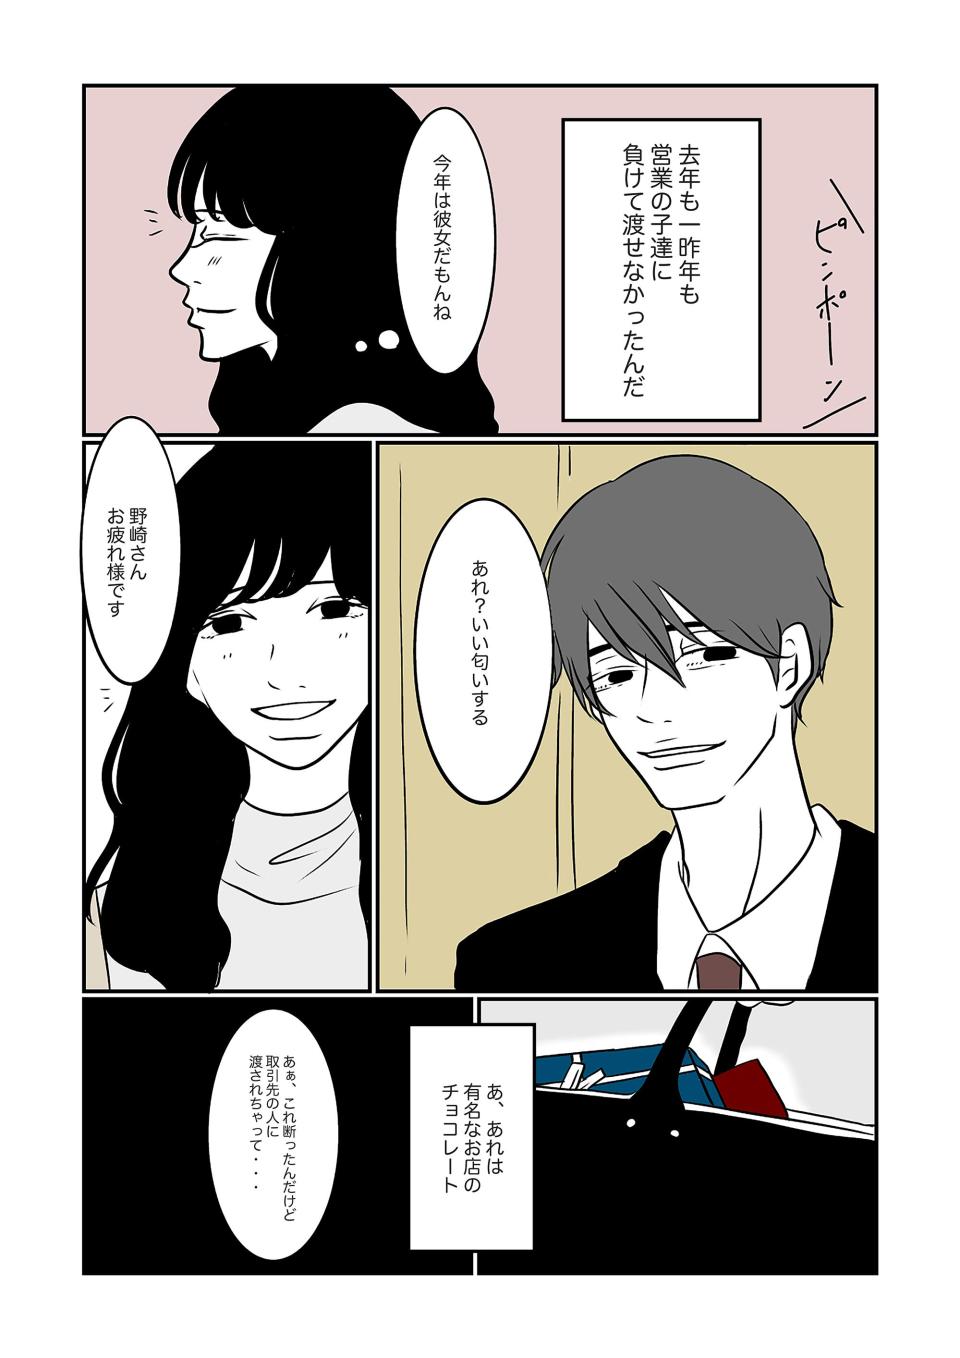 Masuda Miku連載 大人の胸きゅん恋愛漫画vol 9 ハッピーバレンタイン ローリエプレス